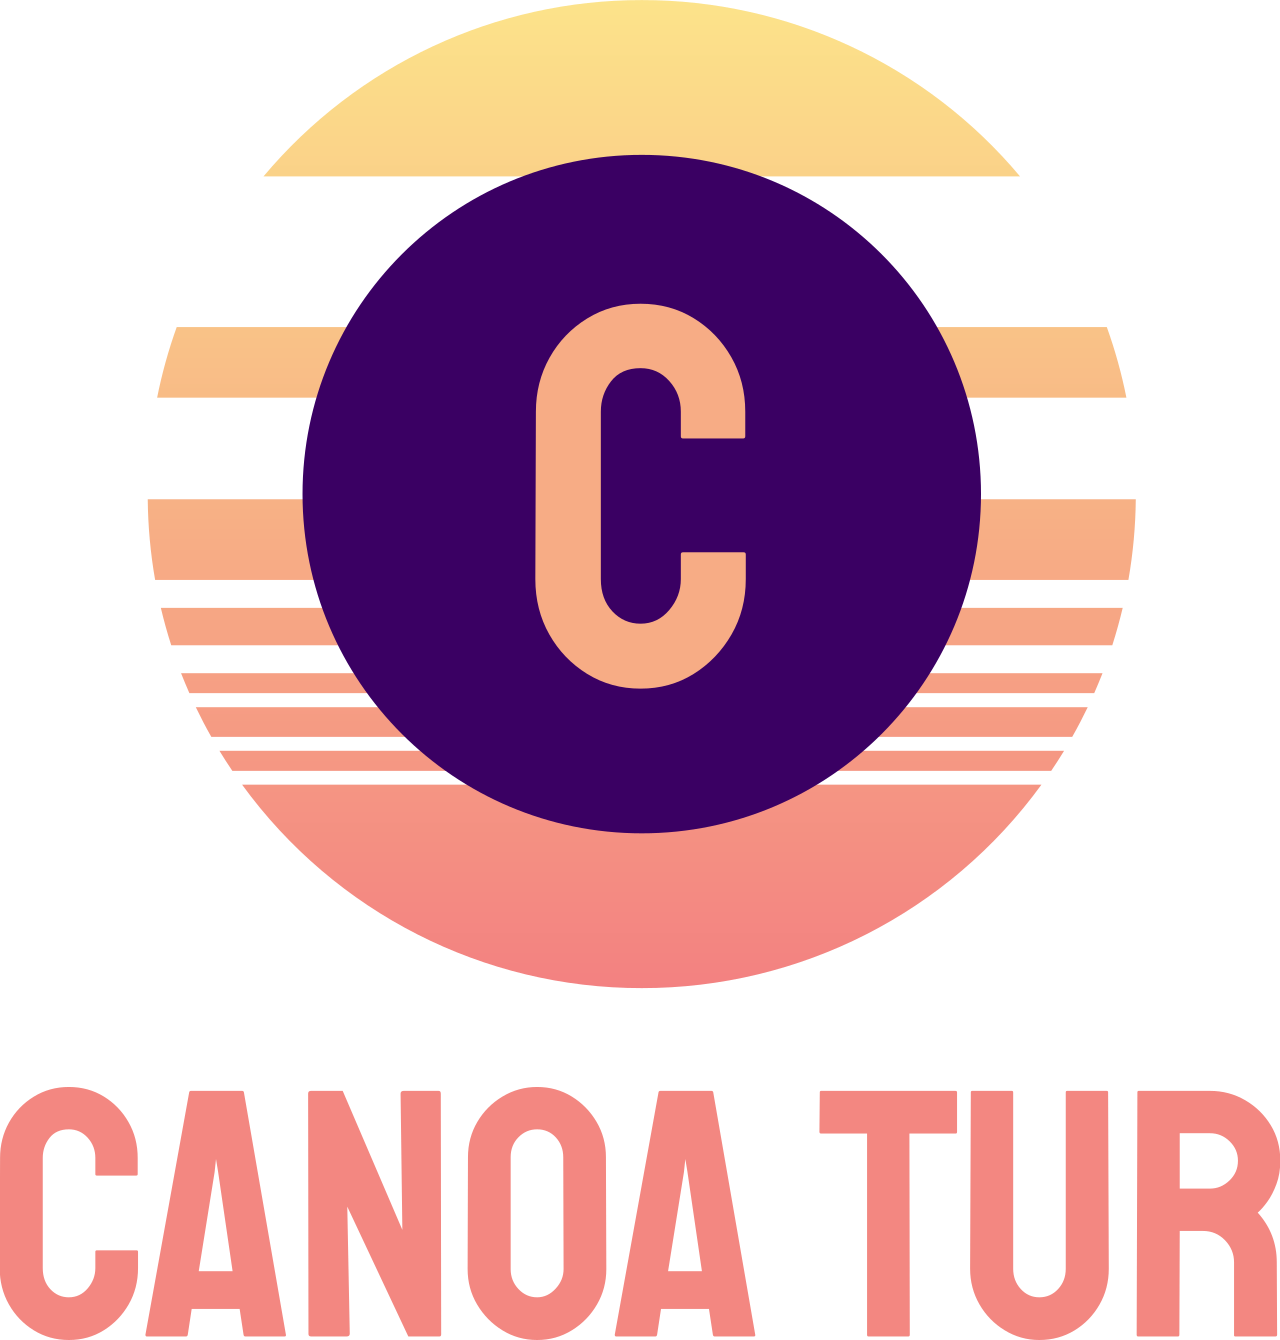 Canoa Tur's web page